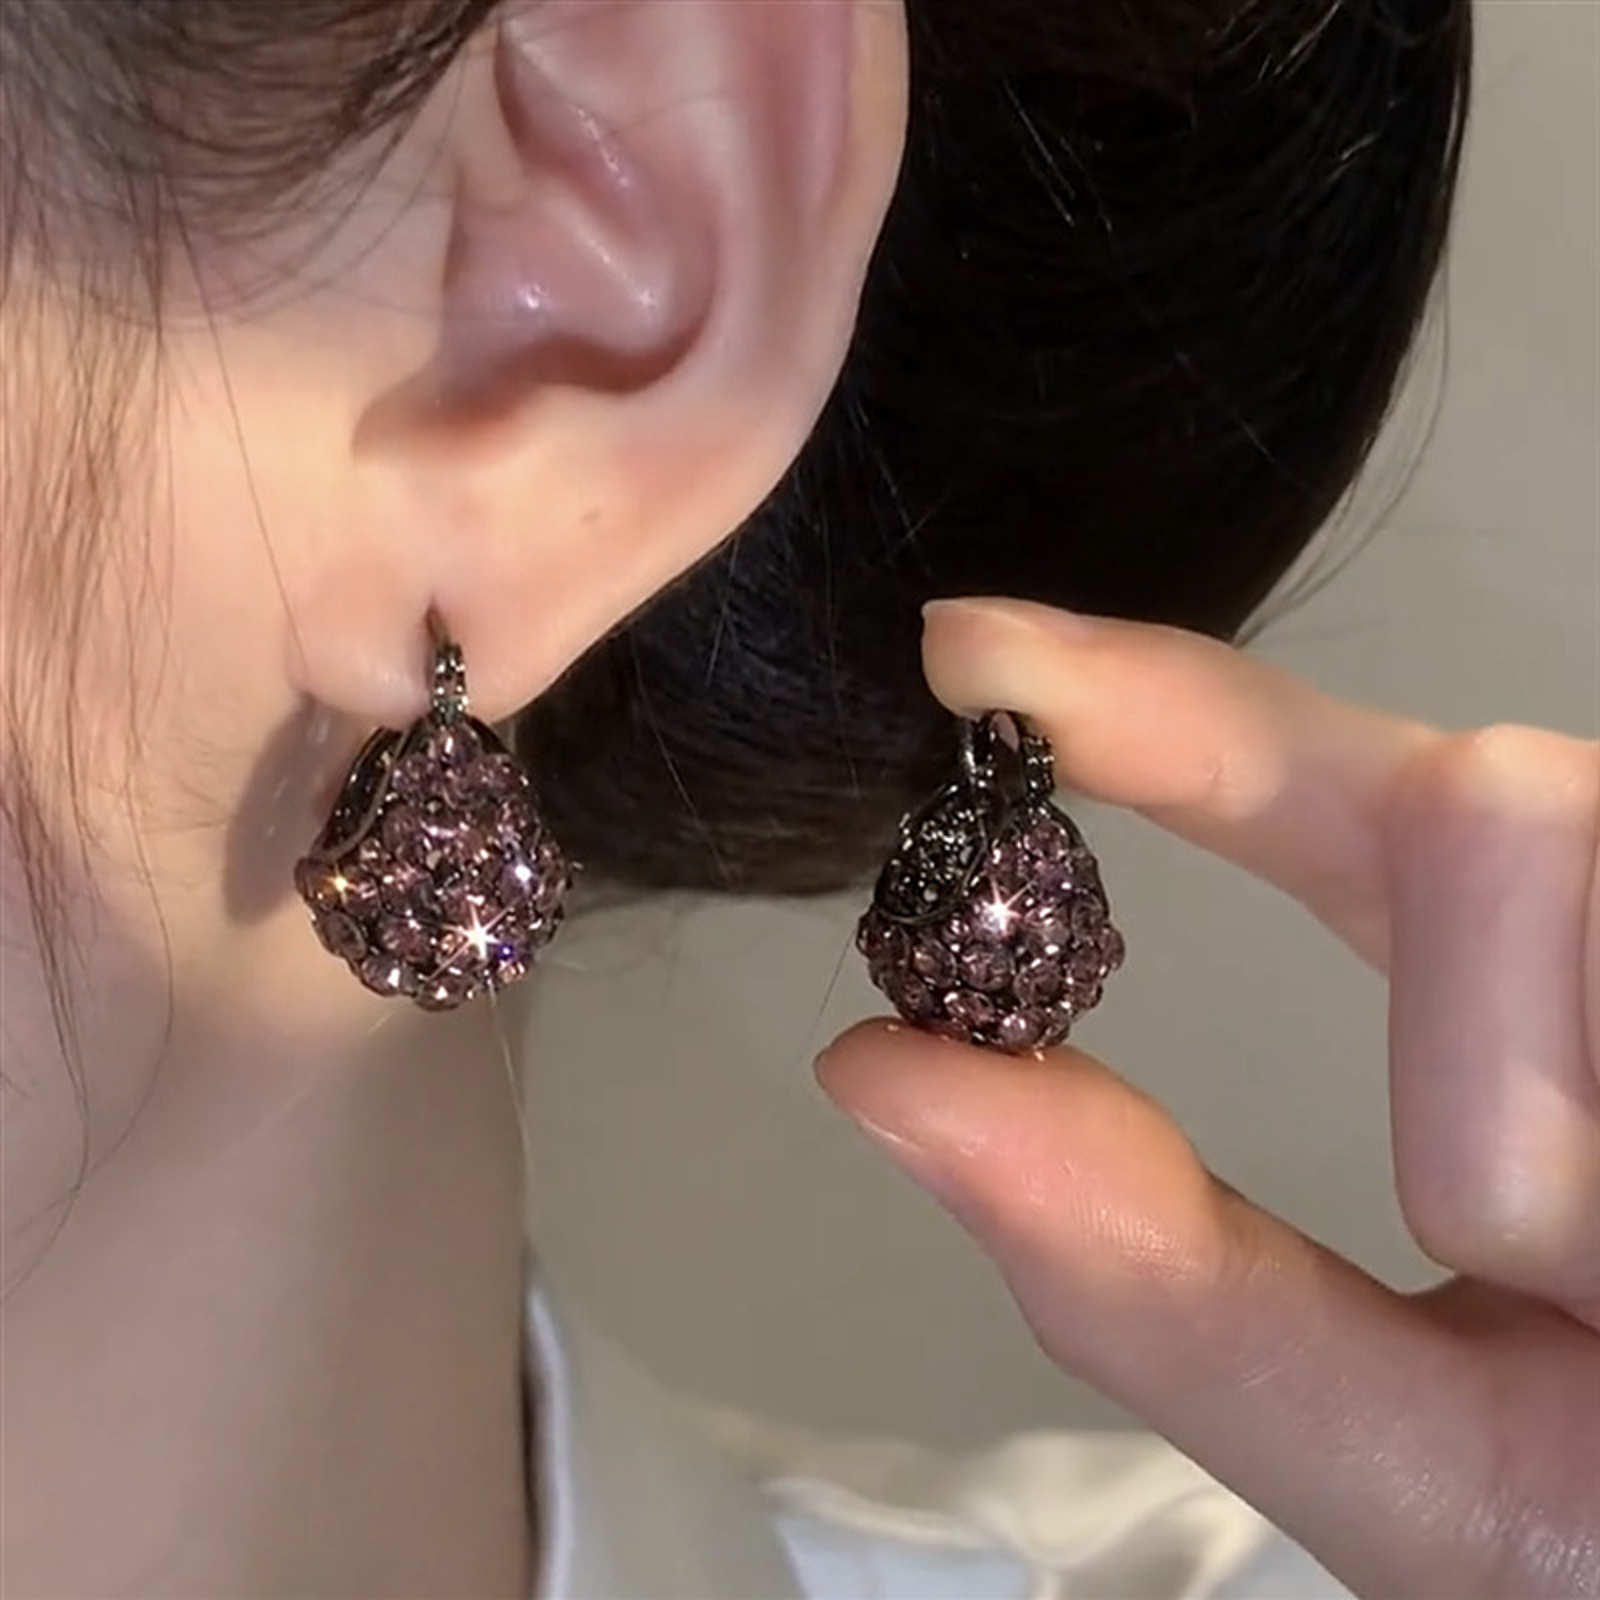 Aggregate more than 180 large purple earrings